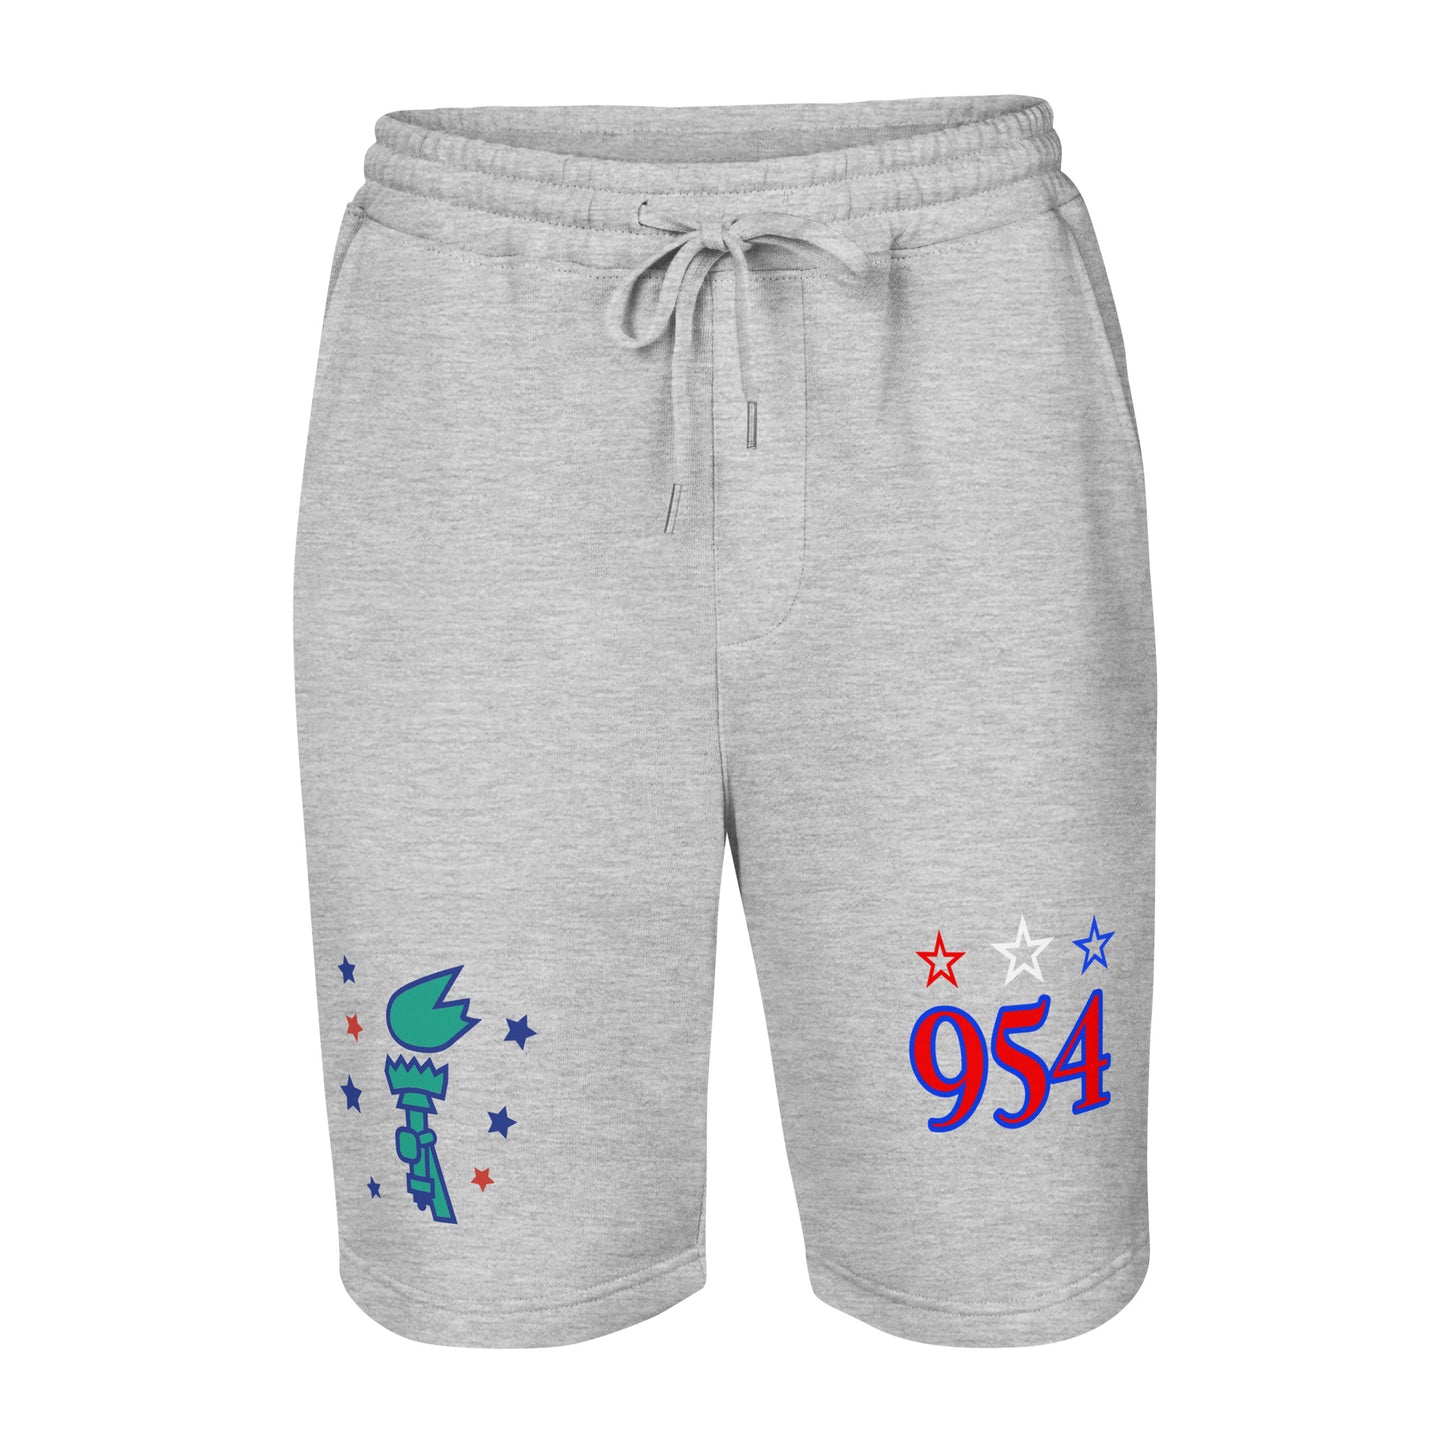 July 4th 954 Signature Men's fleece shorts